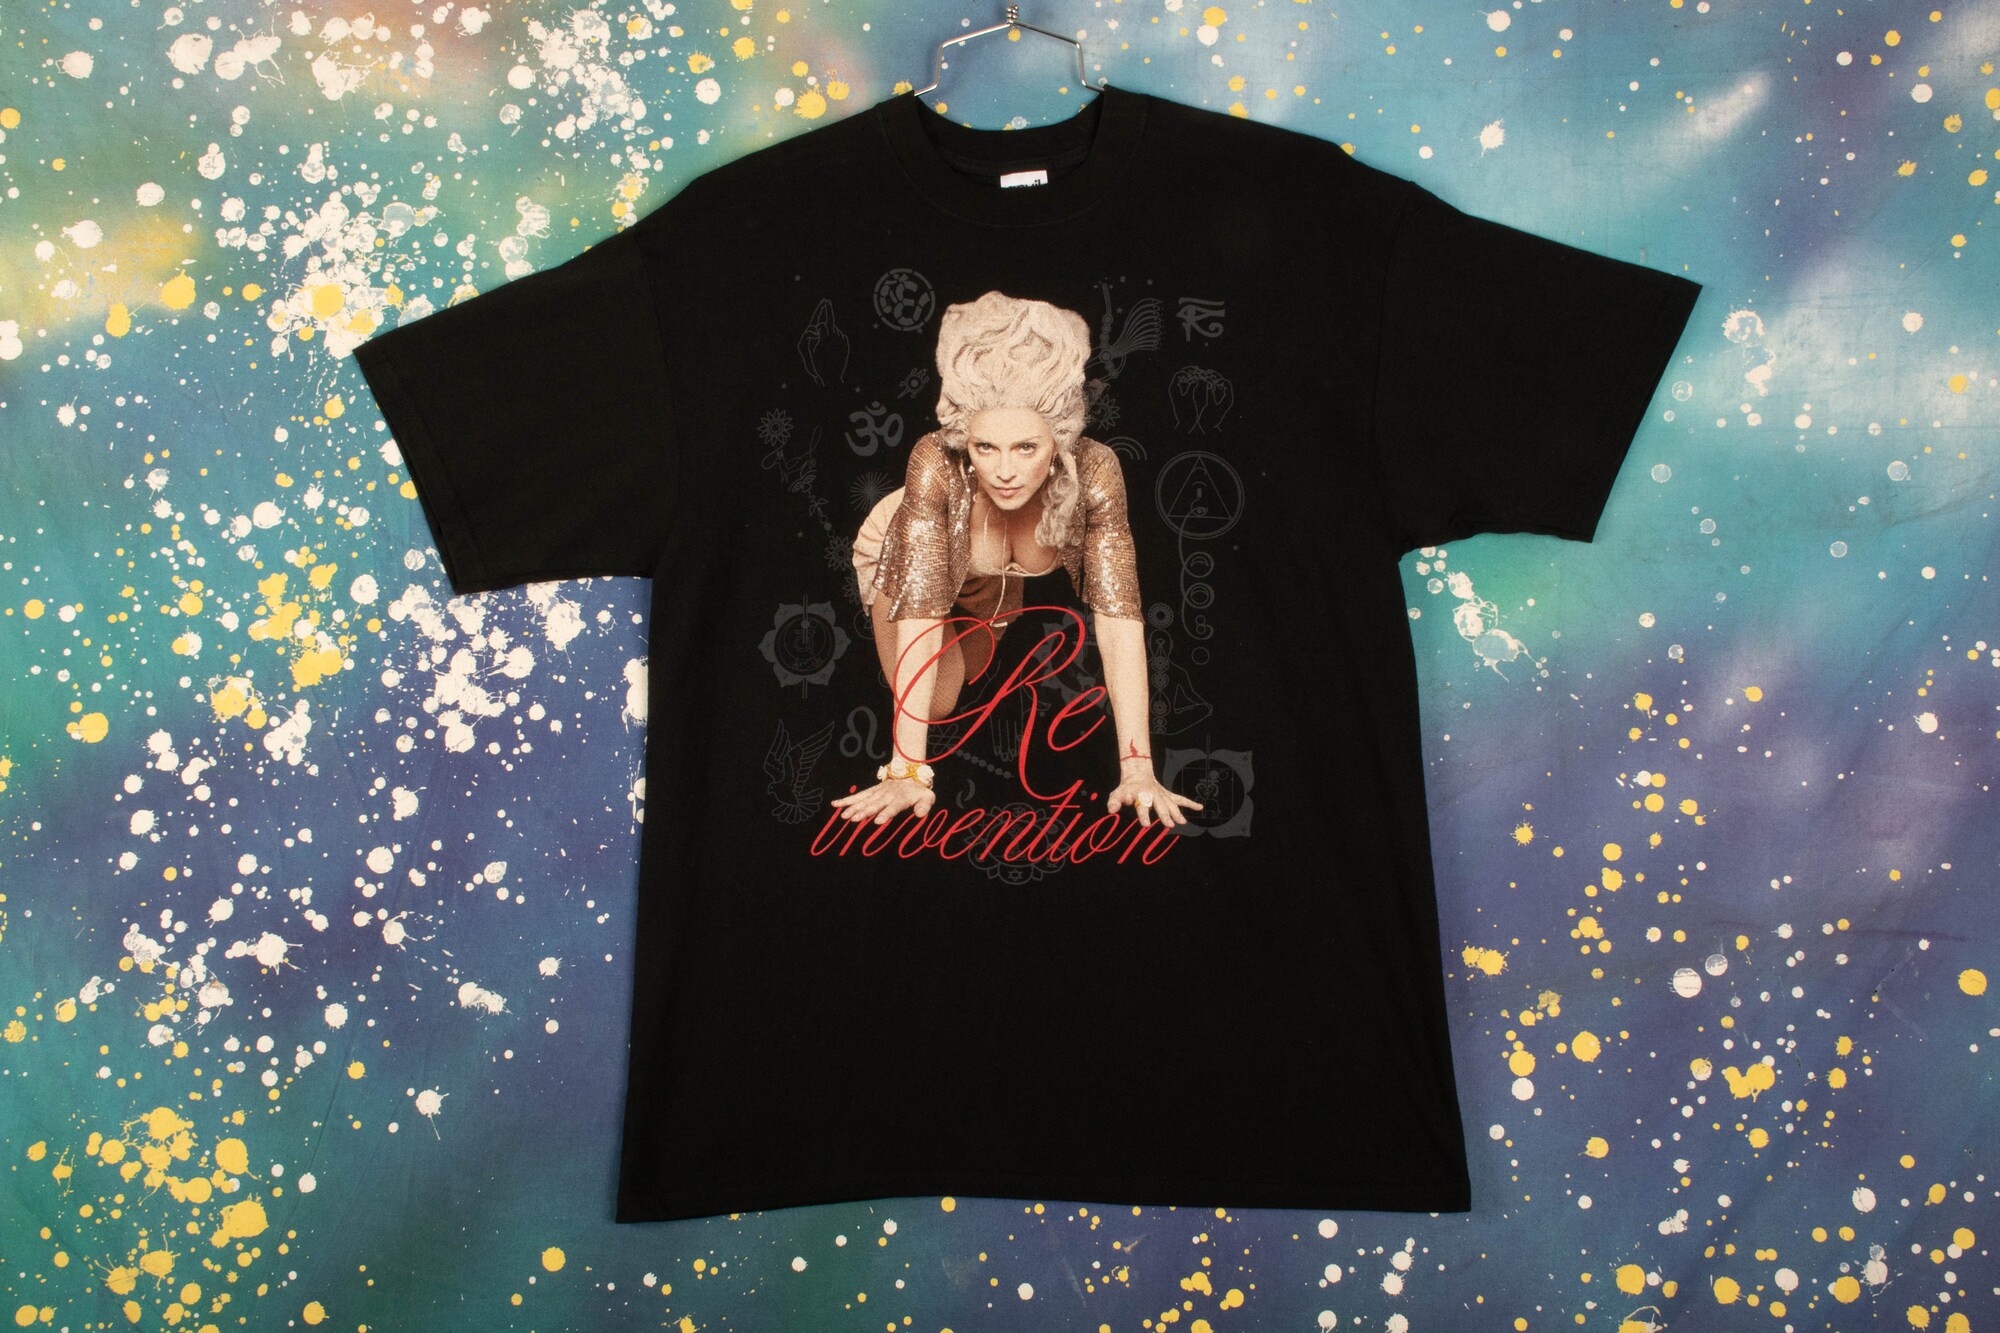 Madonna Re invention 2004 T-Shirt